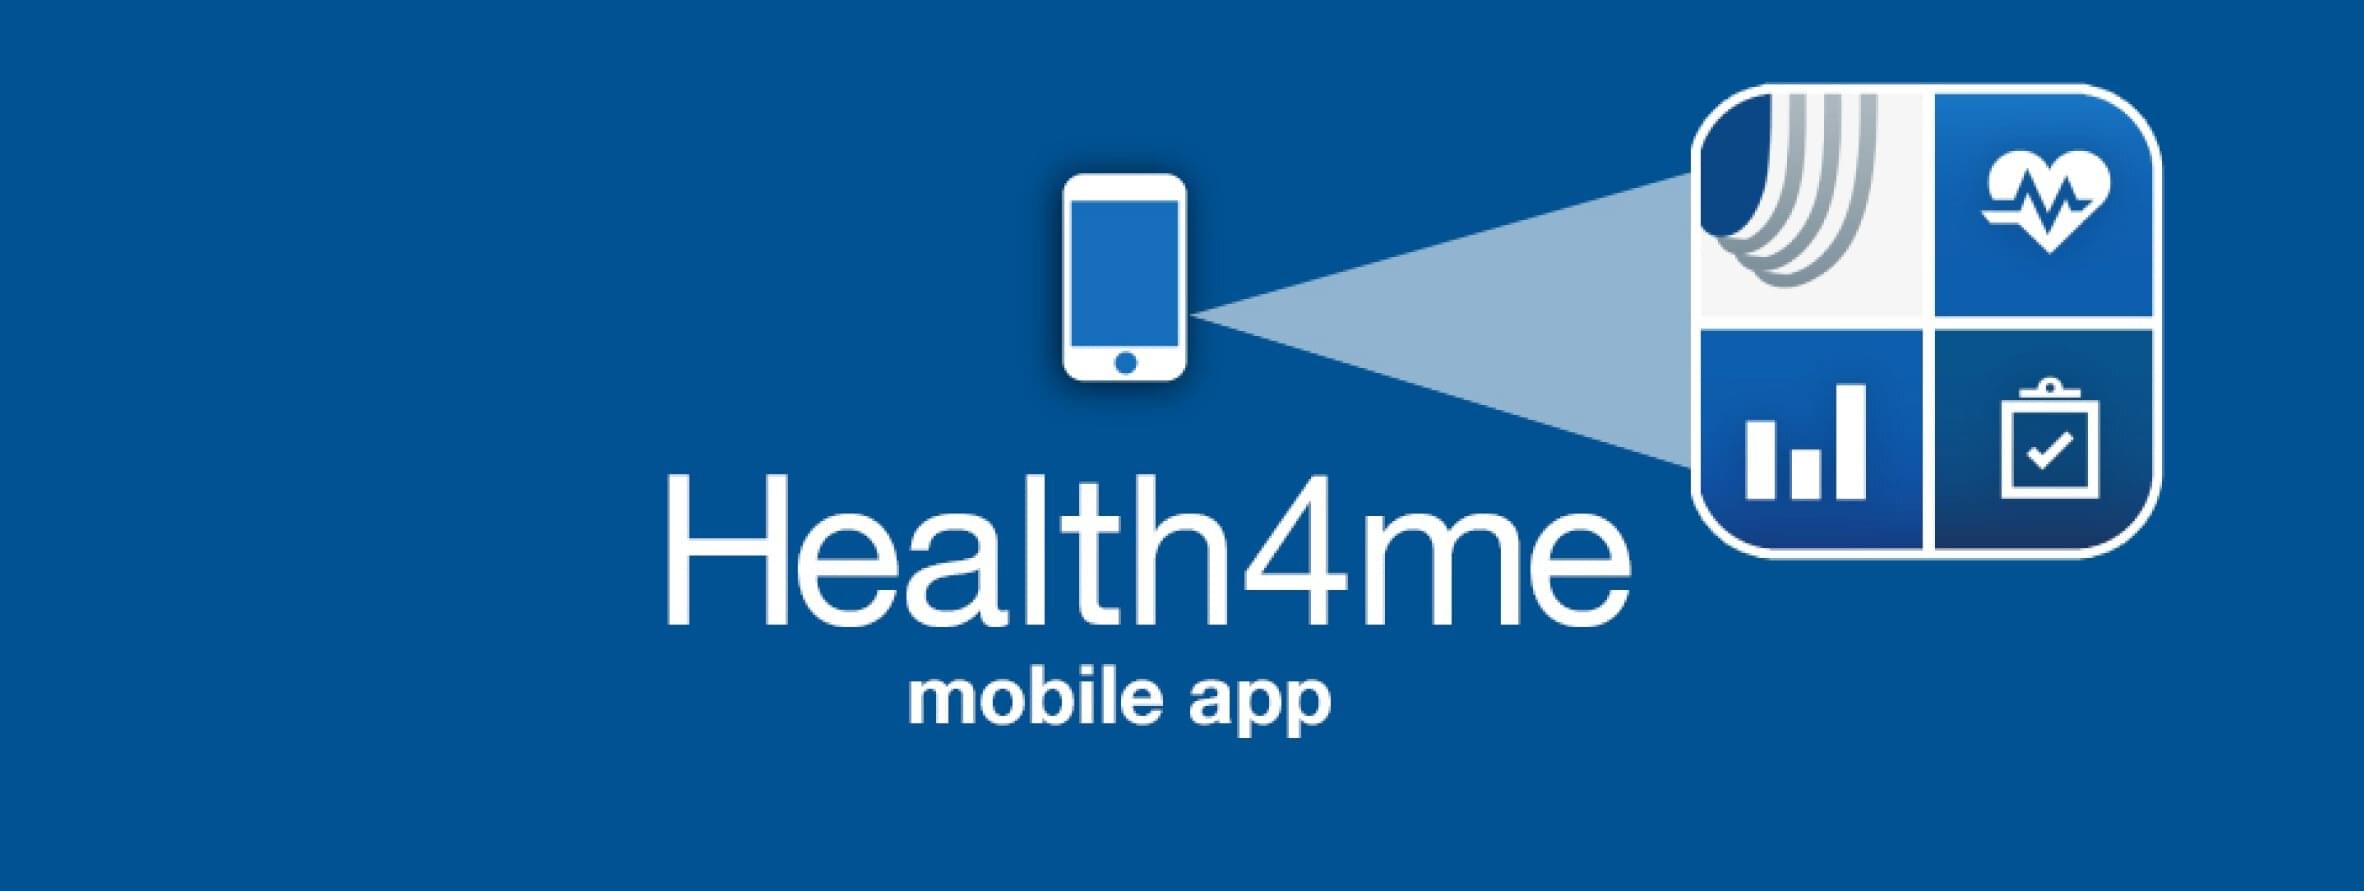 health4me mobile app